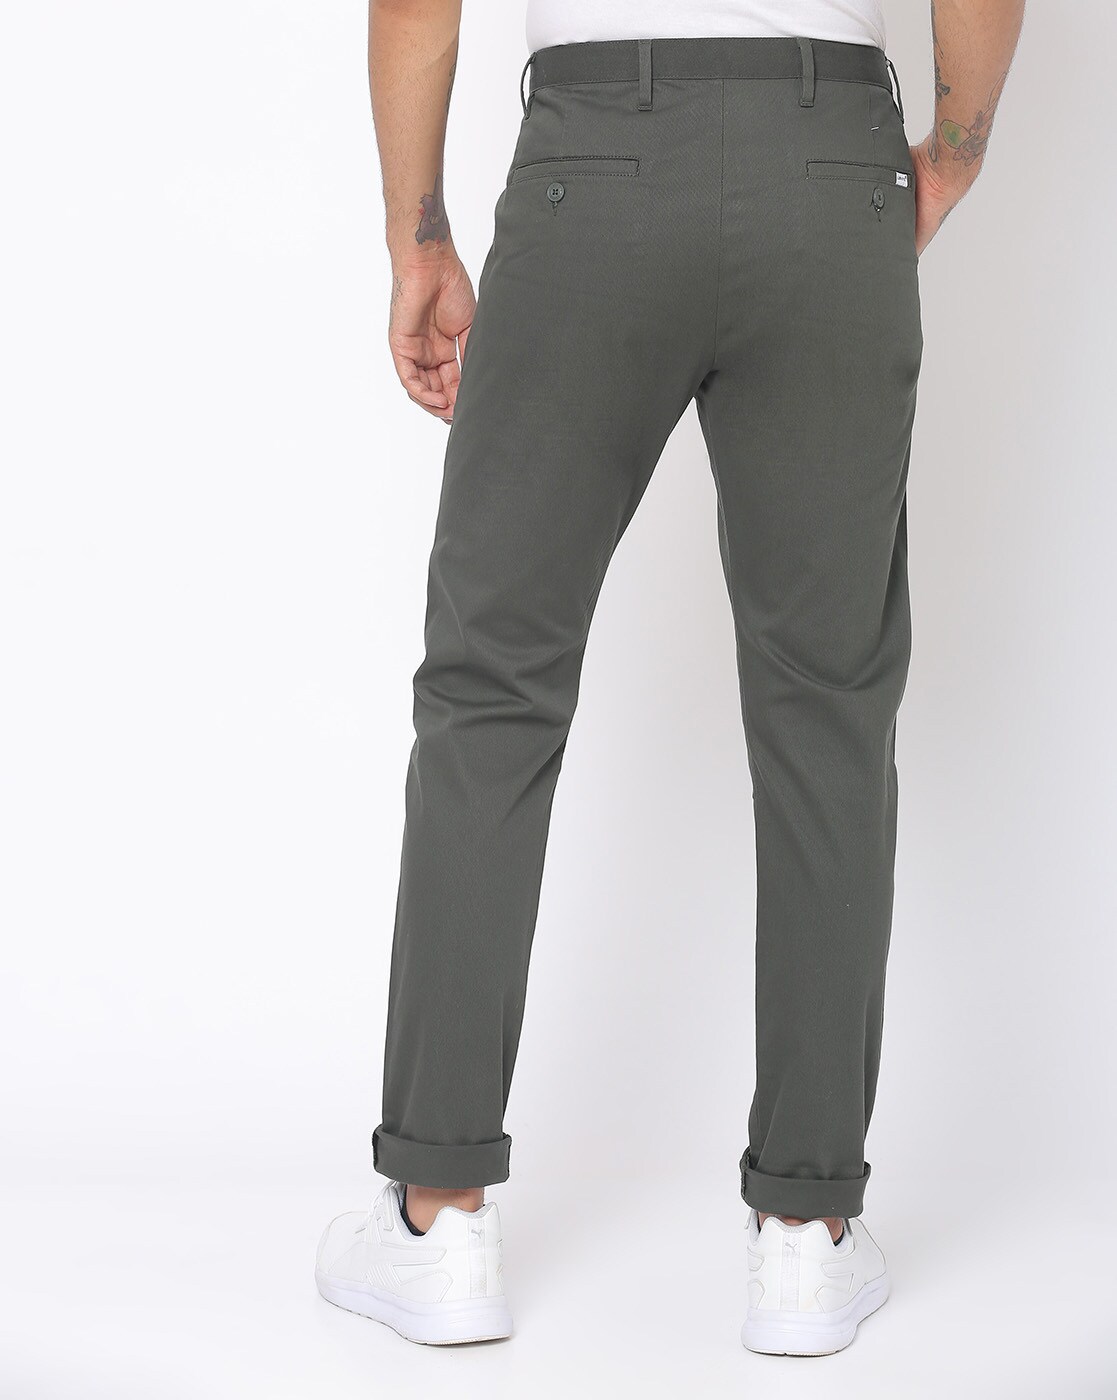 levi's gray pants